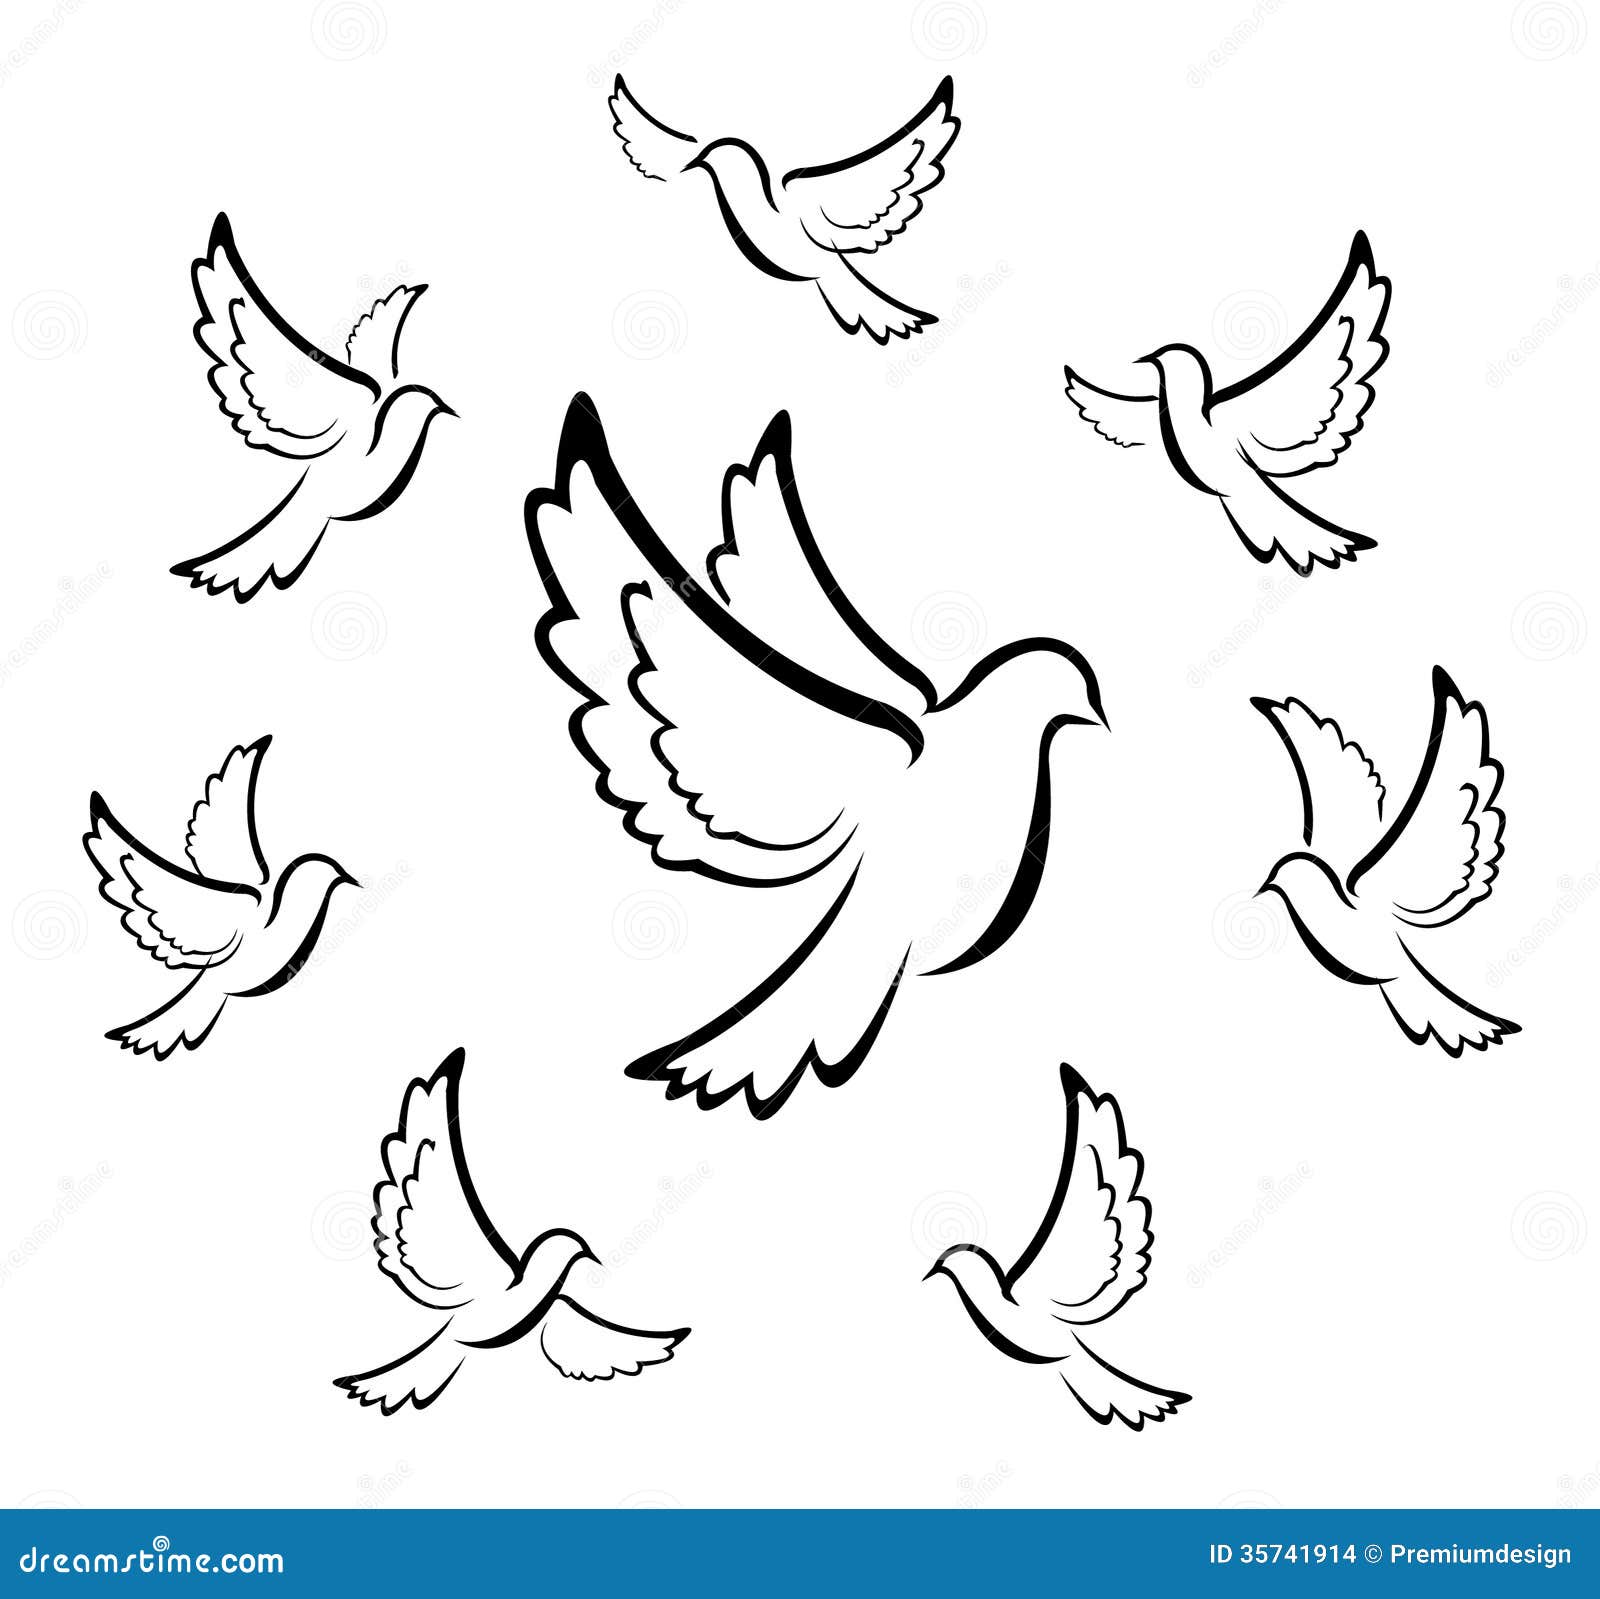 Dove symbol Illustration stock vector. Illustration of abstract - 35741914